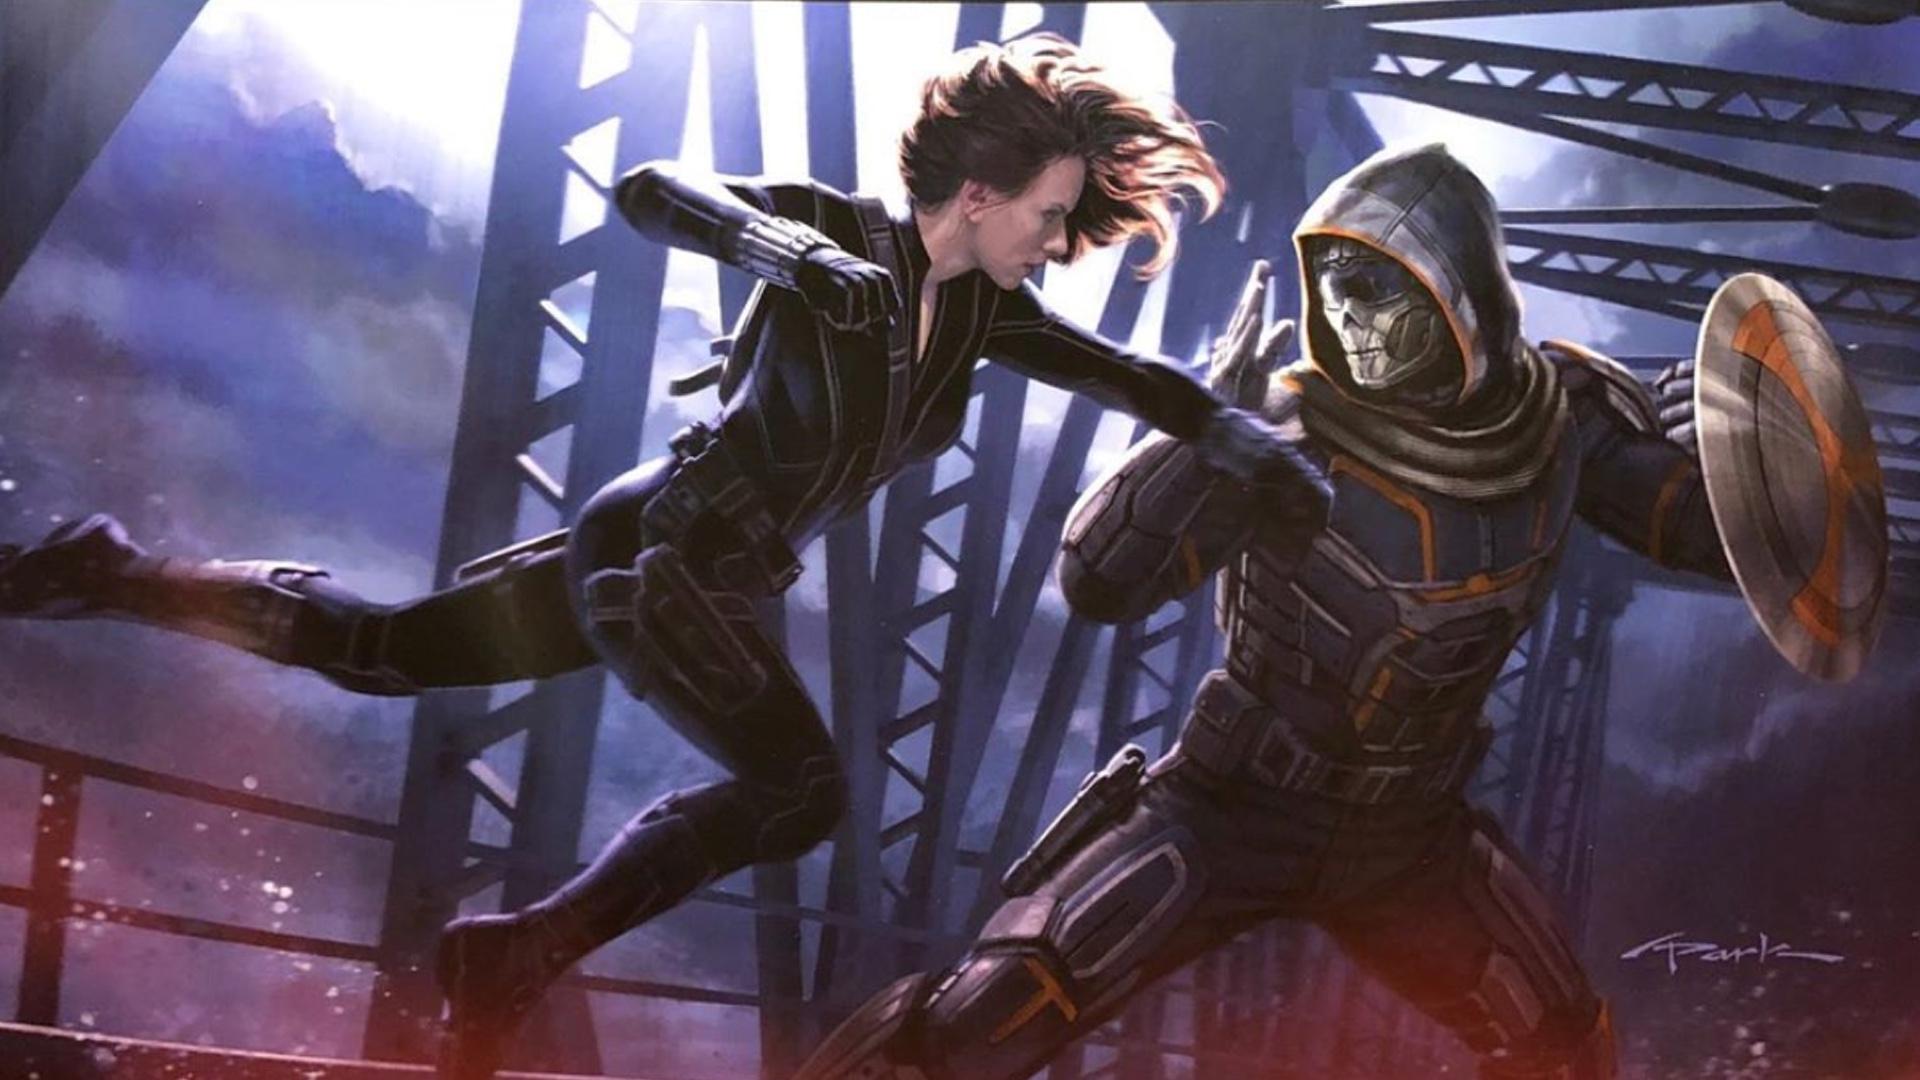 BLACK WIDOW Movie Poster Art Shows Black Widow Fighting Taskmaster